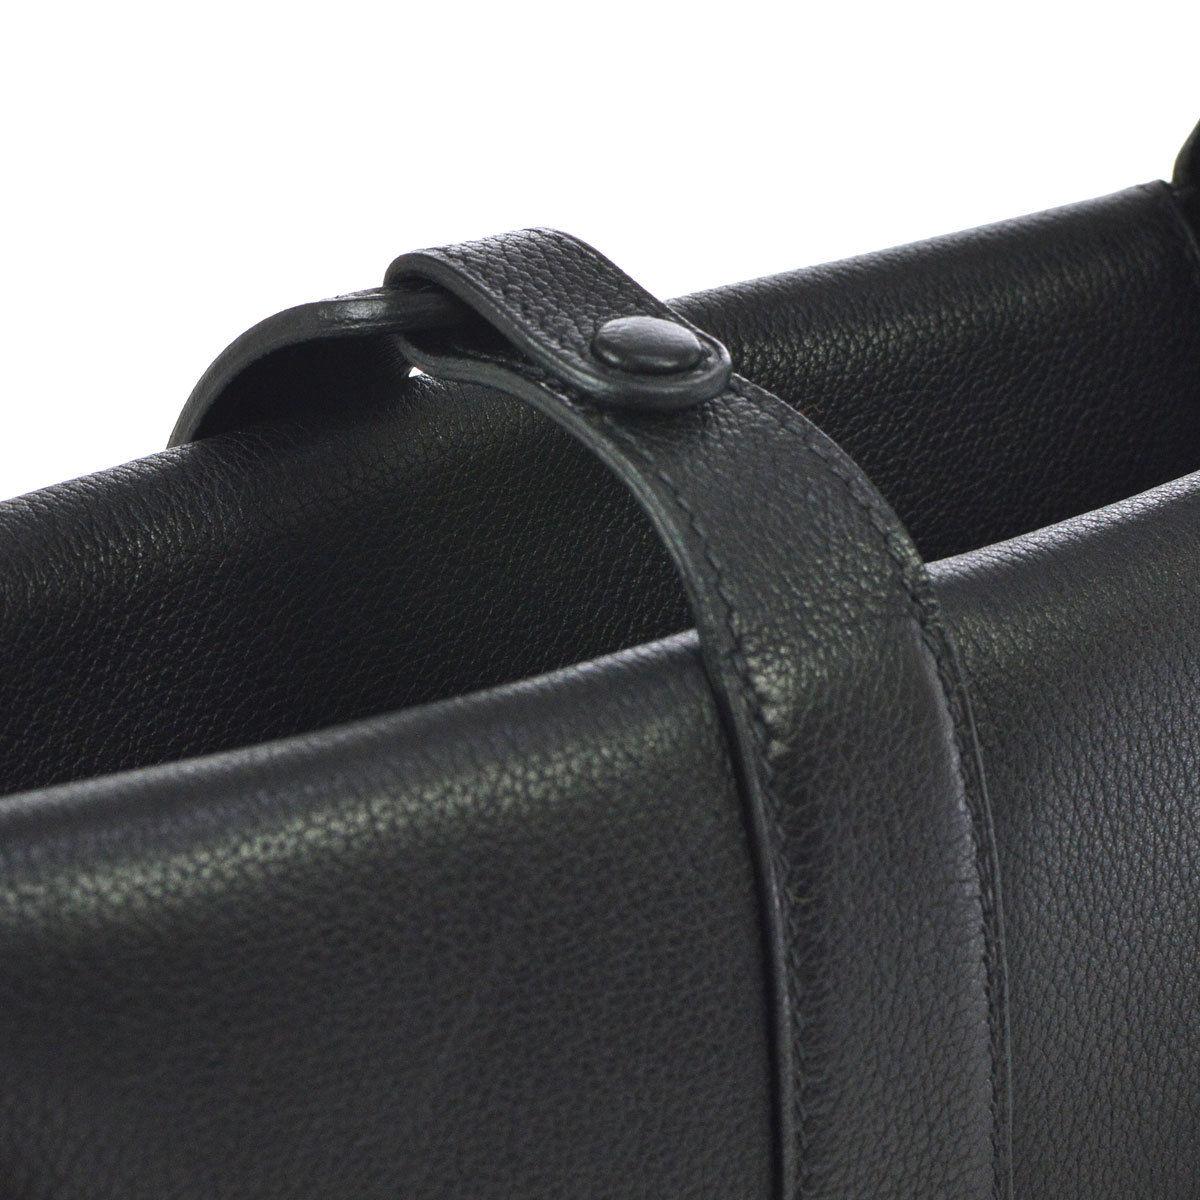 Hermes Black Leather Large Hobo  Top Handle Carryall Shoulder Bag

Leather
Silver tone hardware
Button closure
Leather lining
Date code present 
Made in Frane
Shoulder strap drop 9